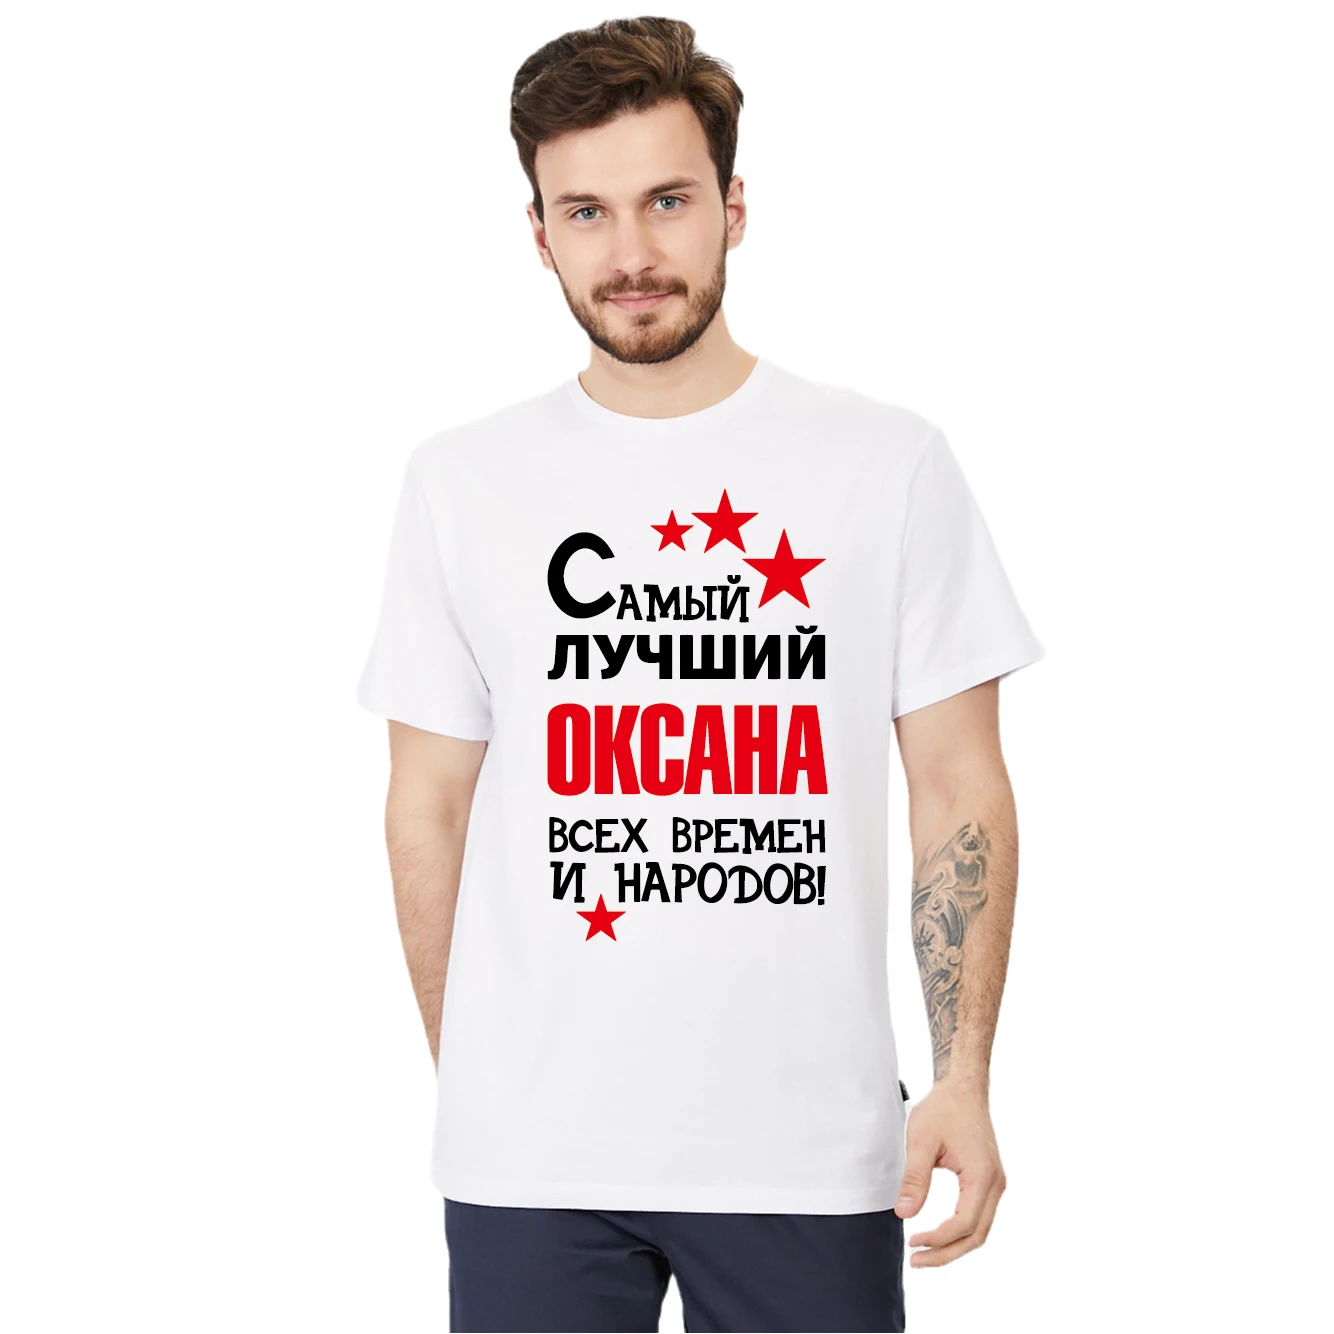 

Men's Printed Cotton T-Shirt Самый Лучший ОКСАНА Всех Времен И Народов! Fashion Russian Style Shirt Tees Tops Custom Name